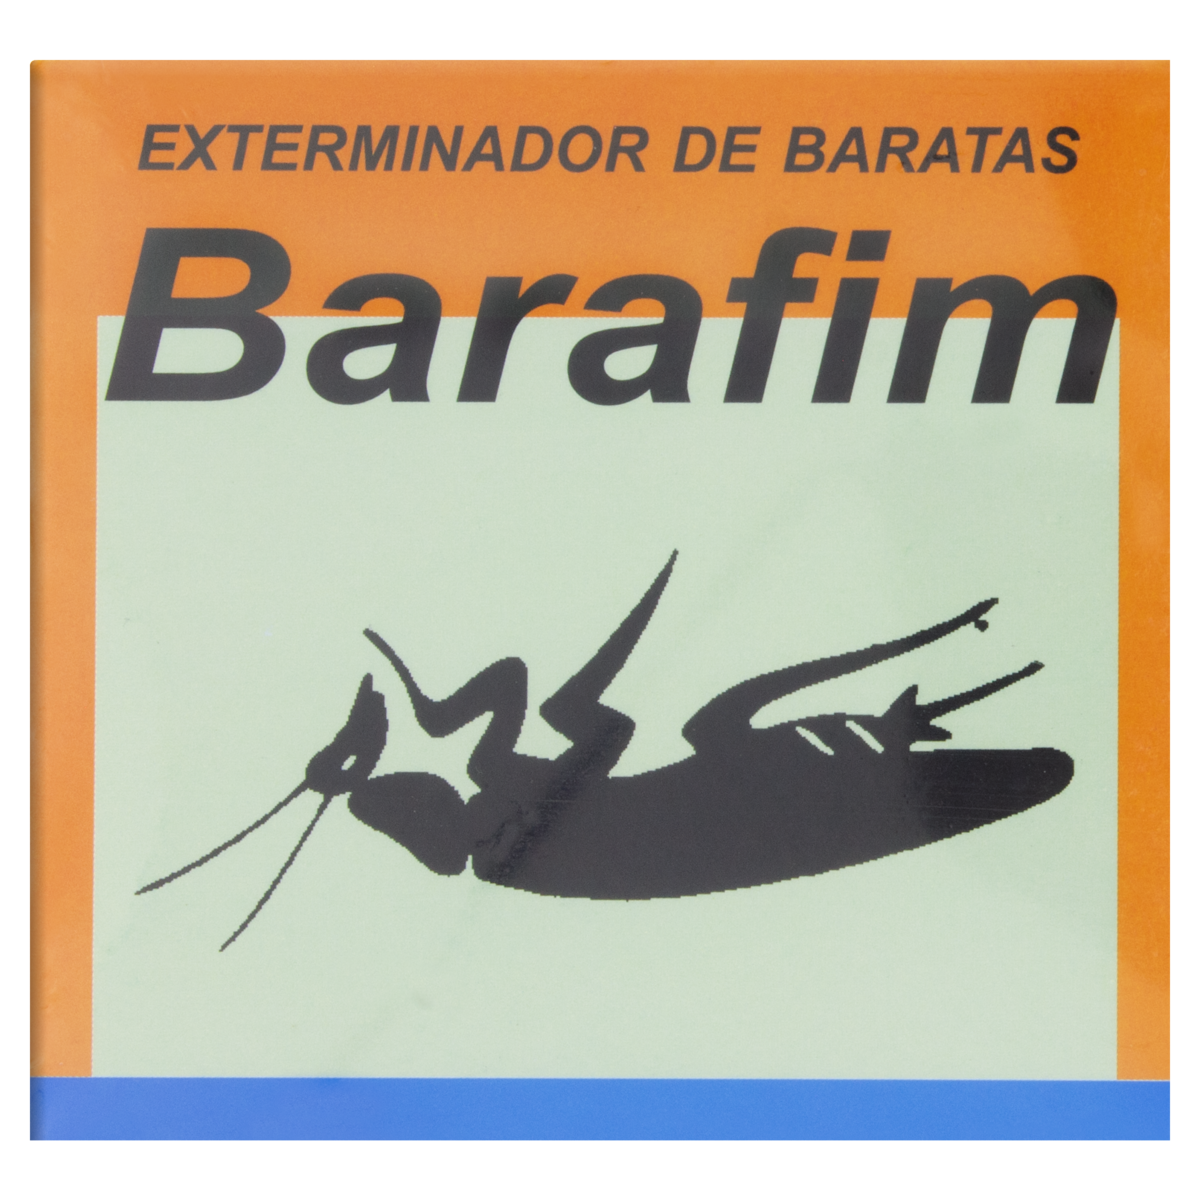 7898069290011 - EXTERMINADOR DE BARATA PASTILHA BARAFIM CAIXA 64 UNIDADES